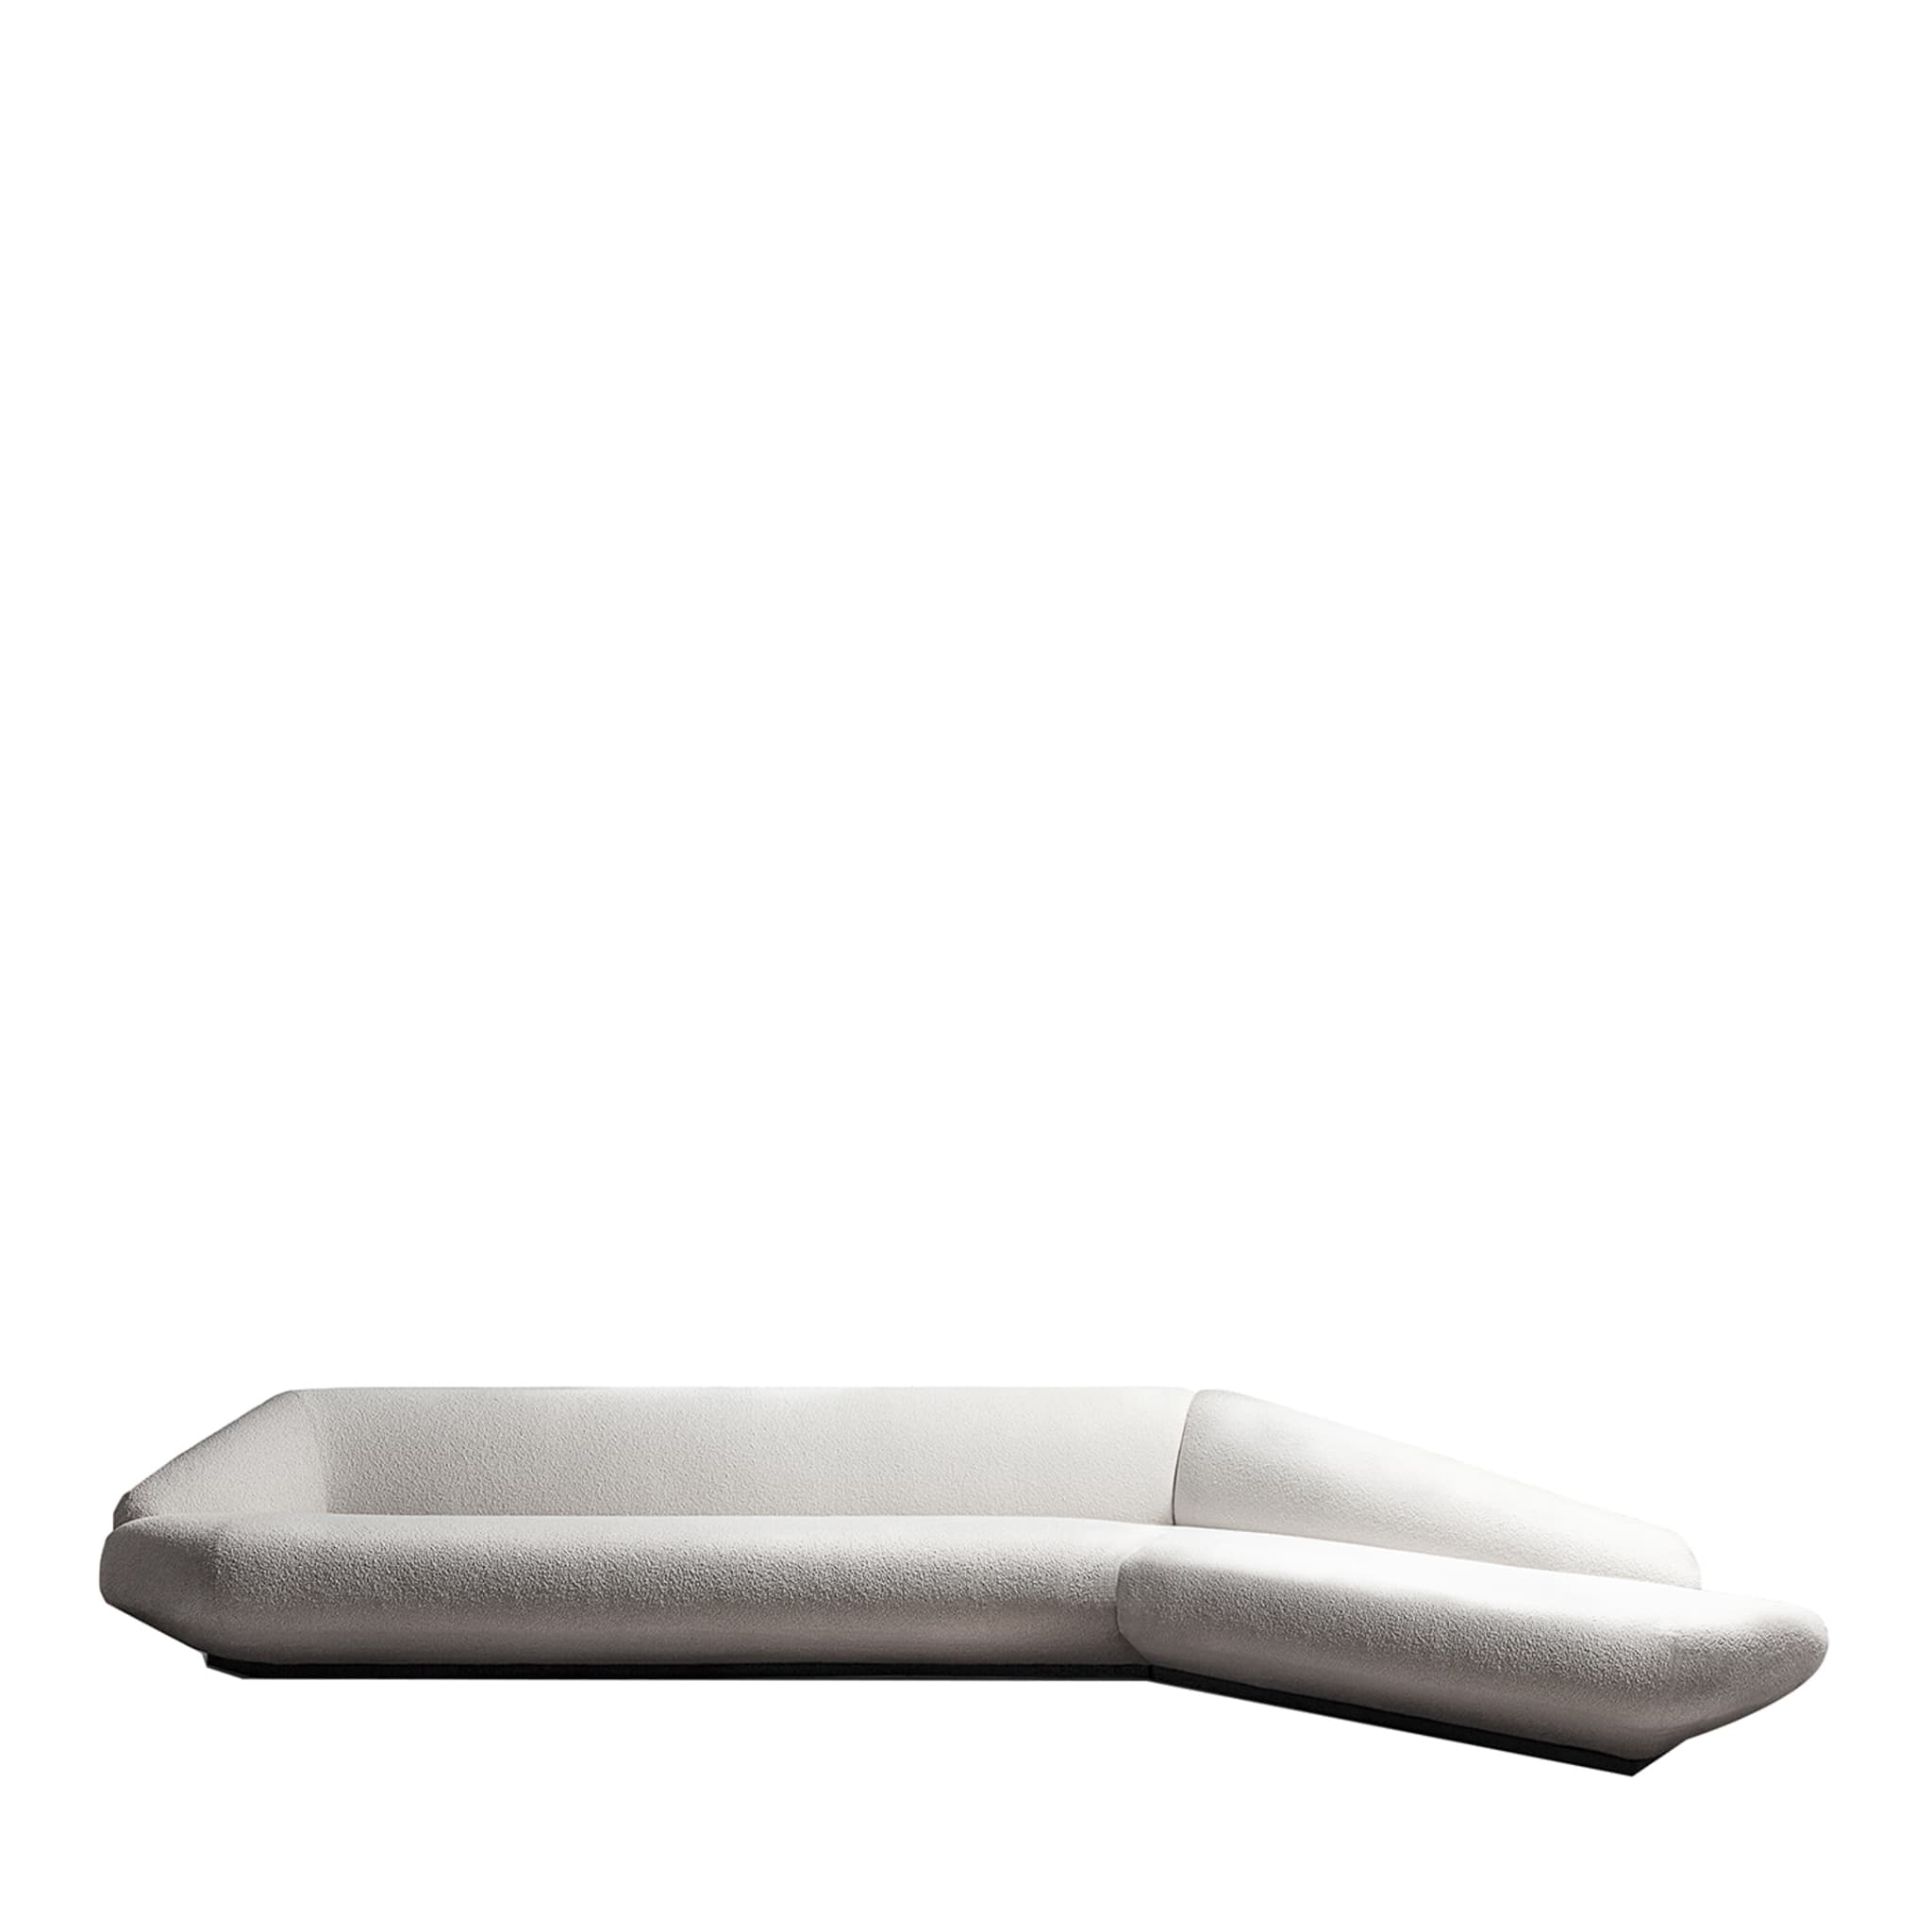 Bolid 370 Angular White Sofa by Gianluigi Landoni - Main view